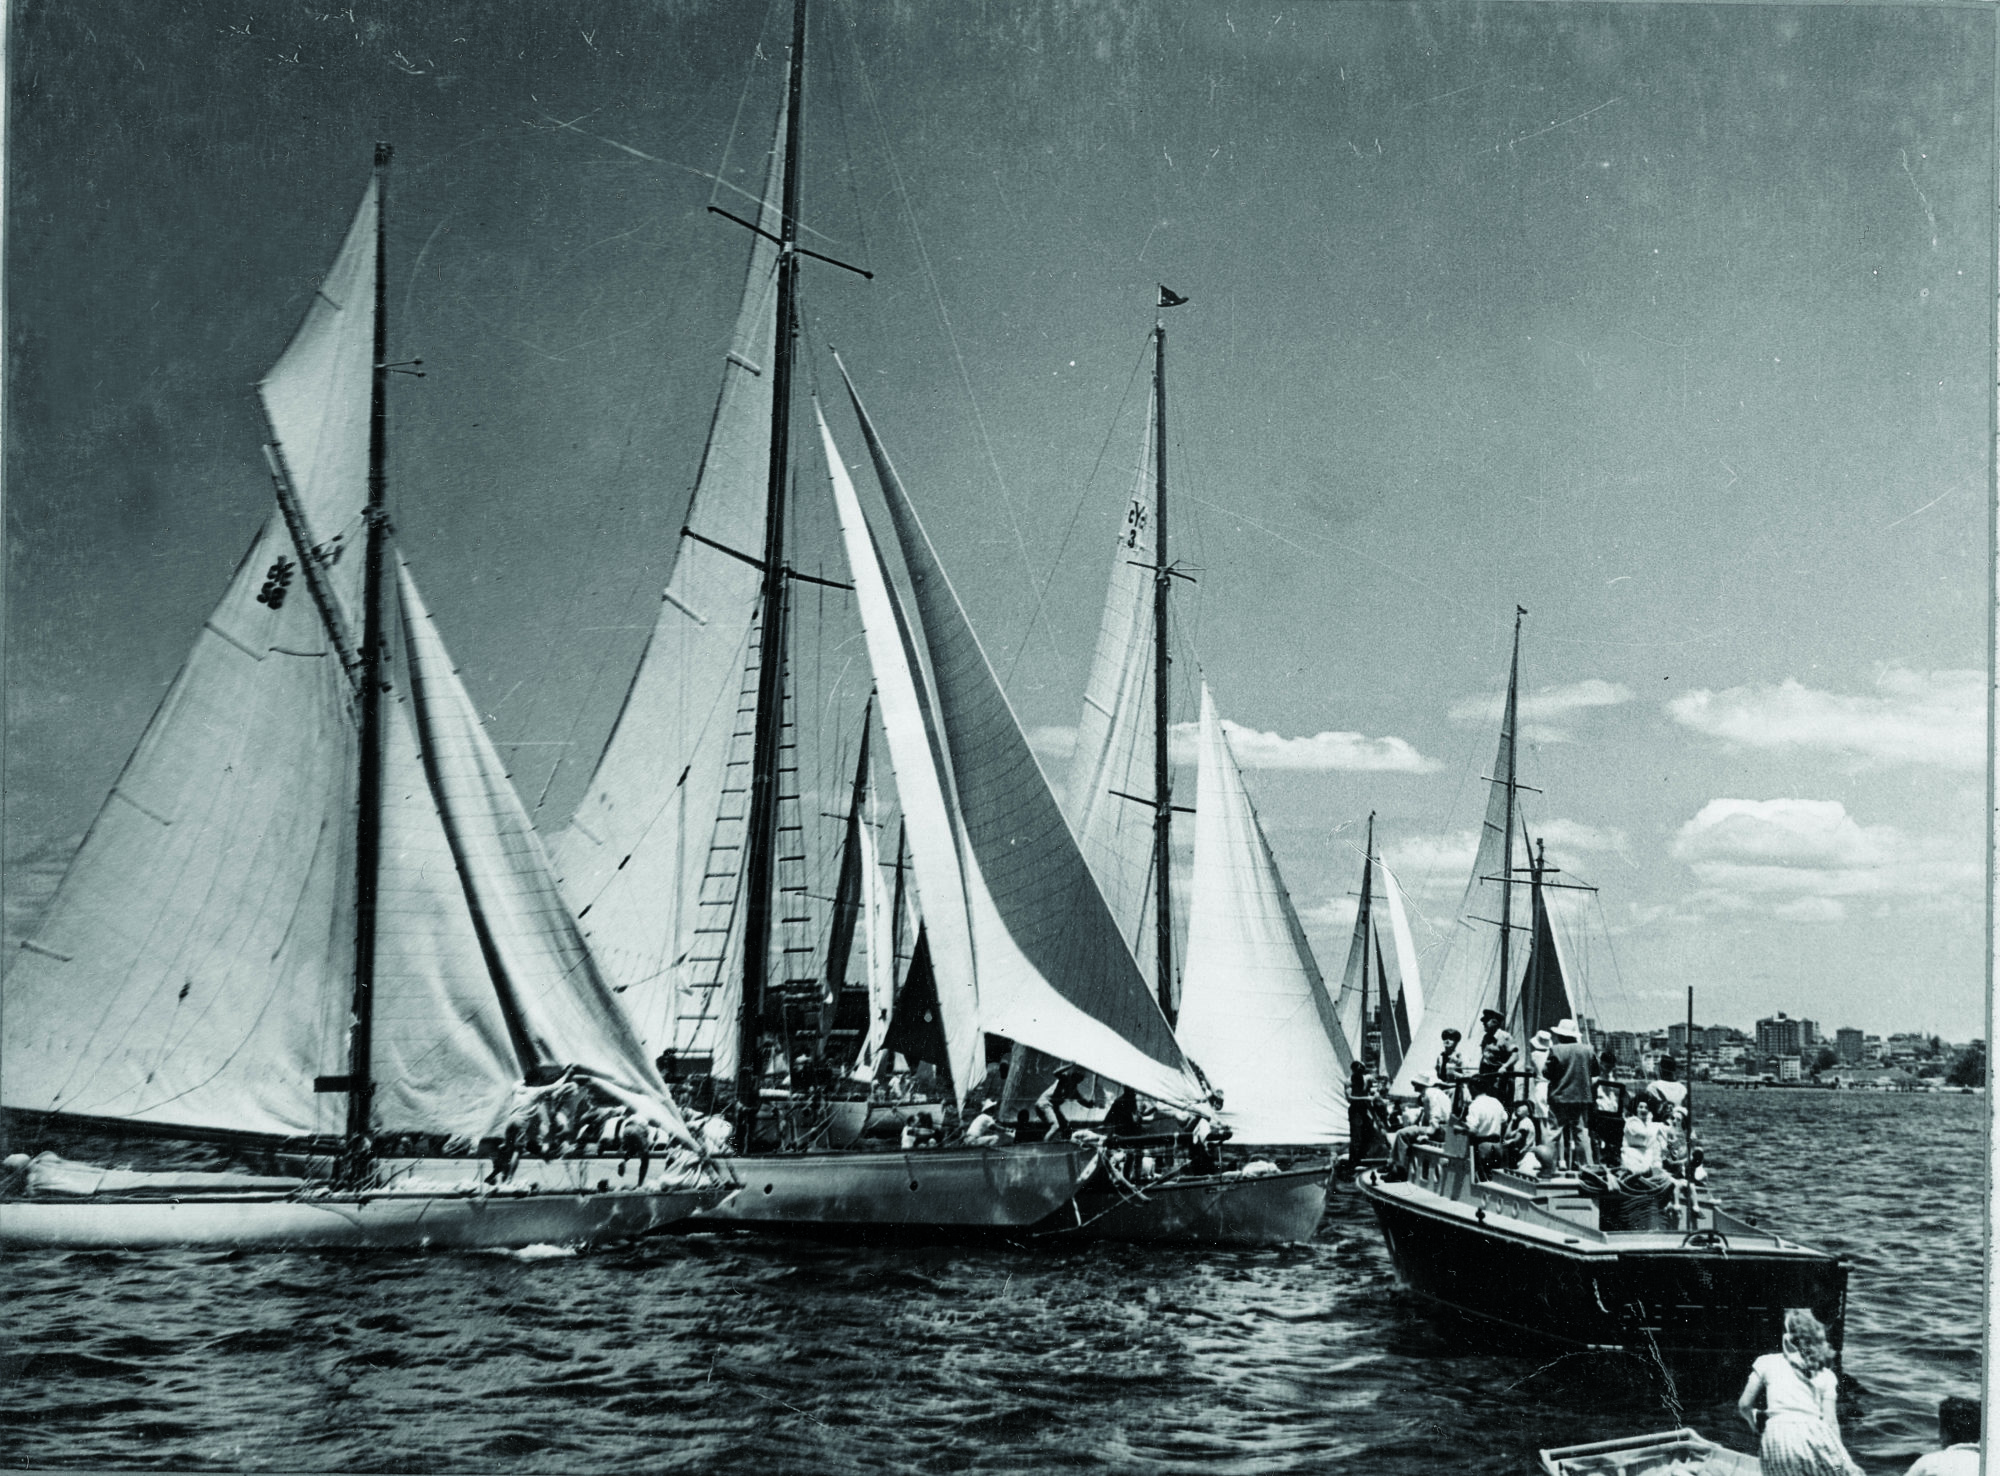 history of sydney to hobart yacht race